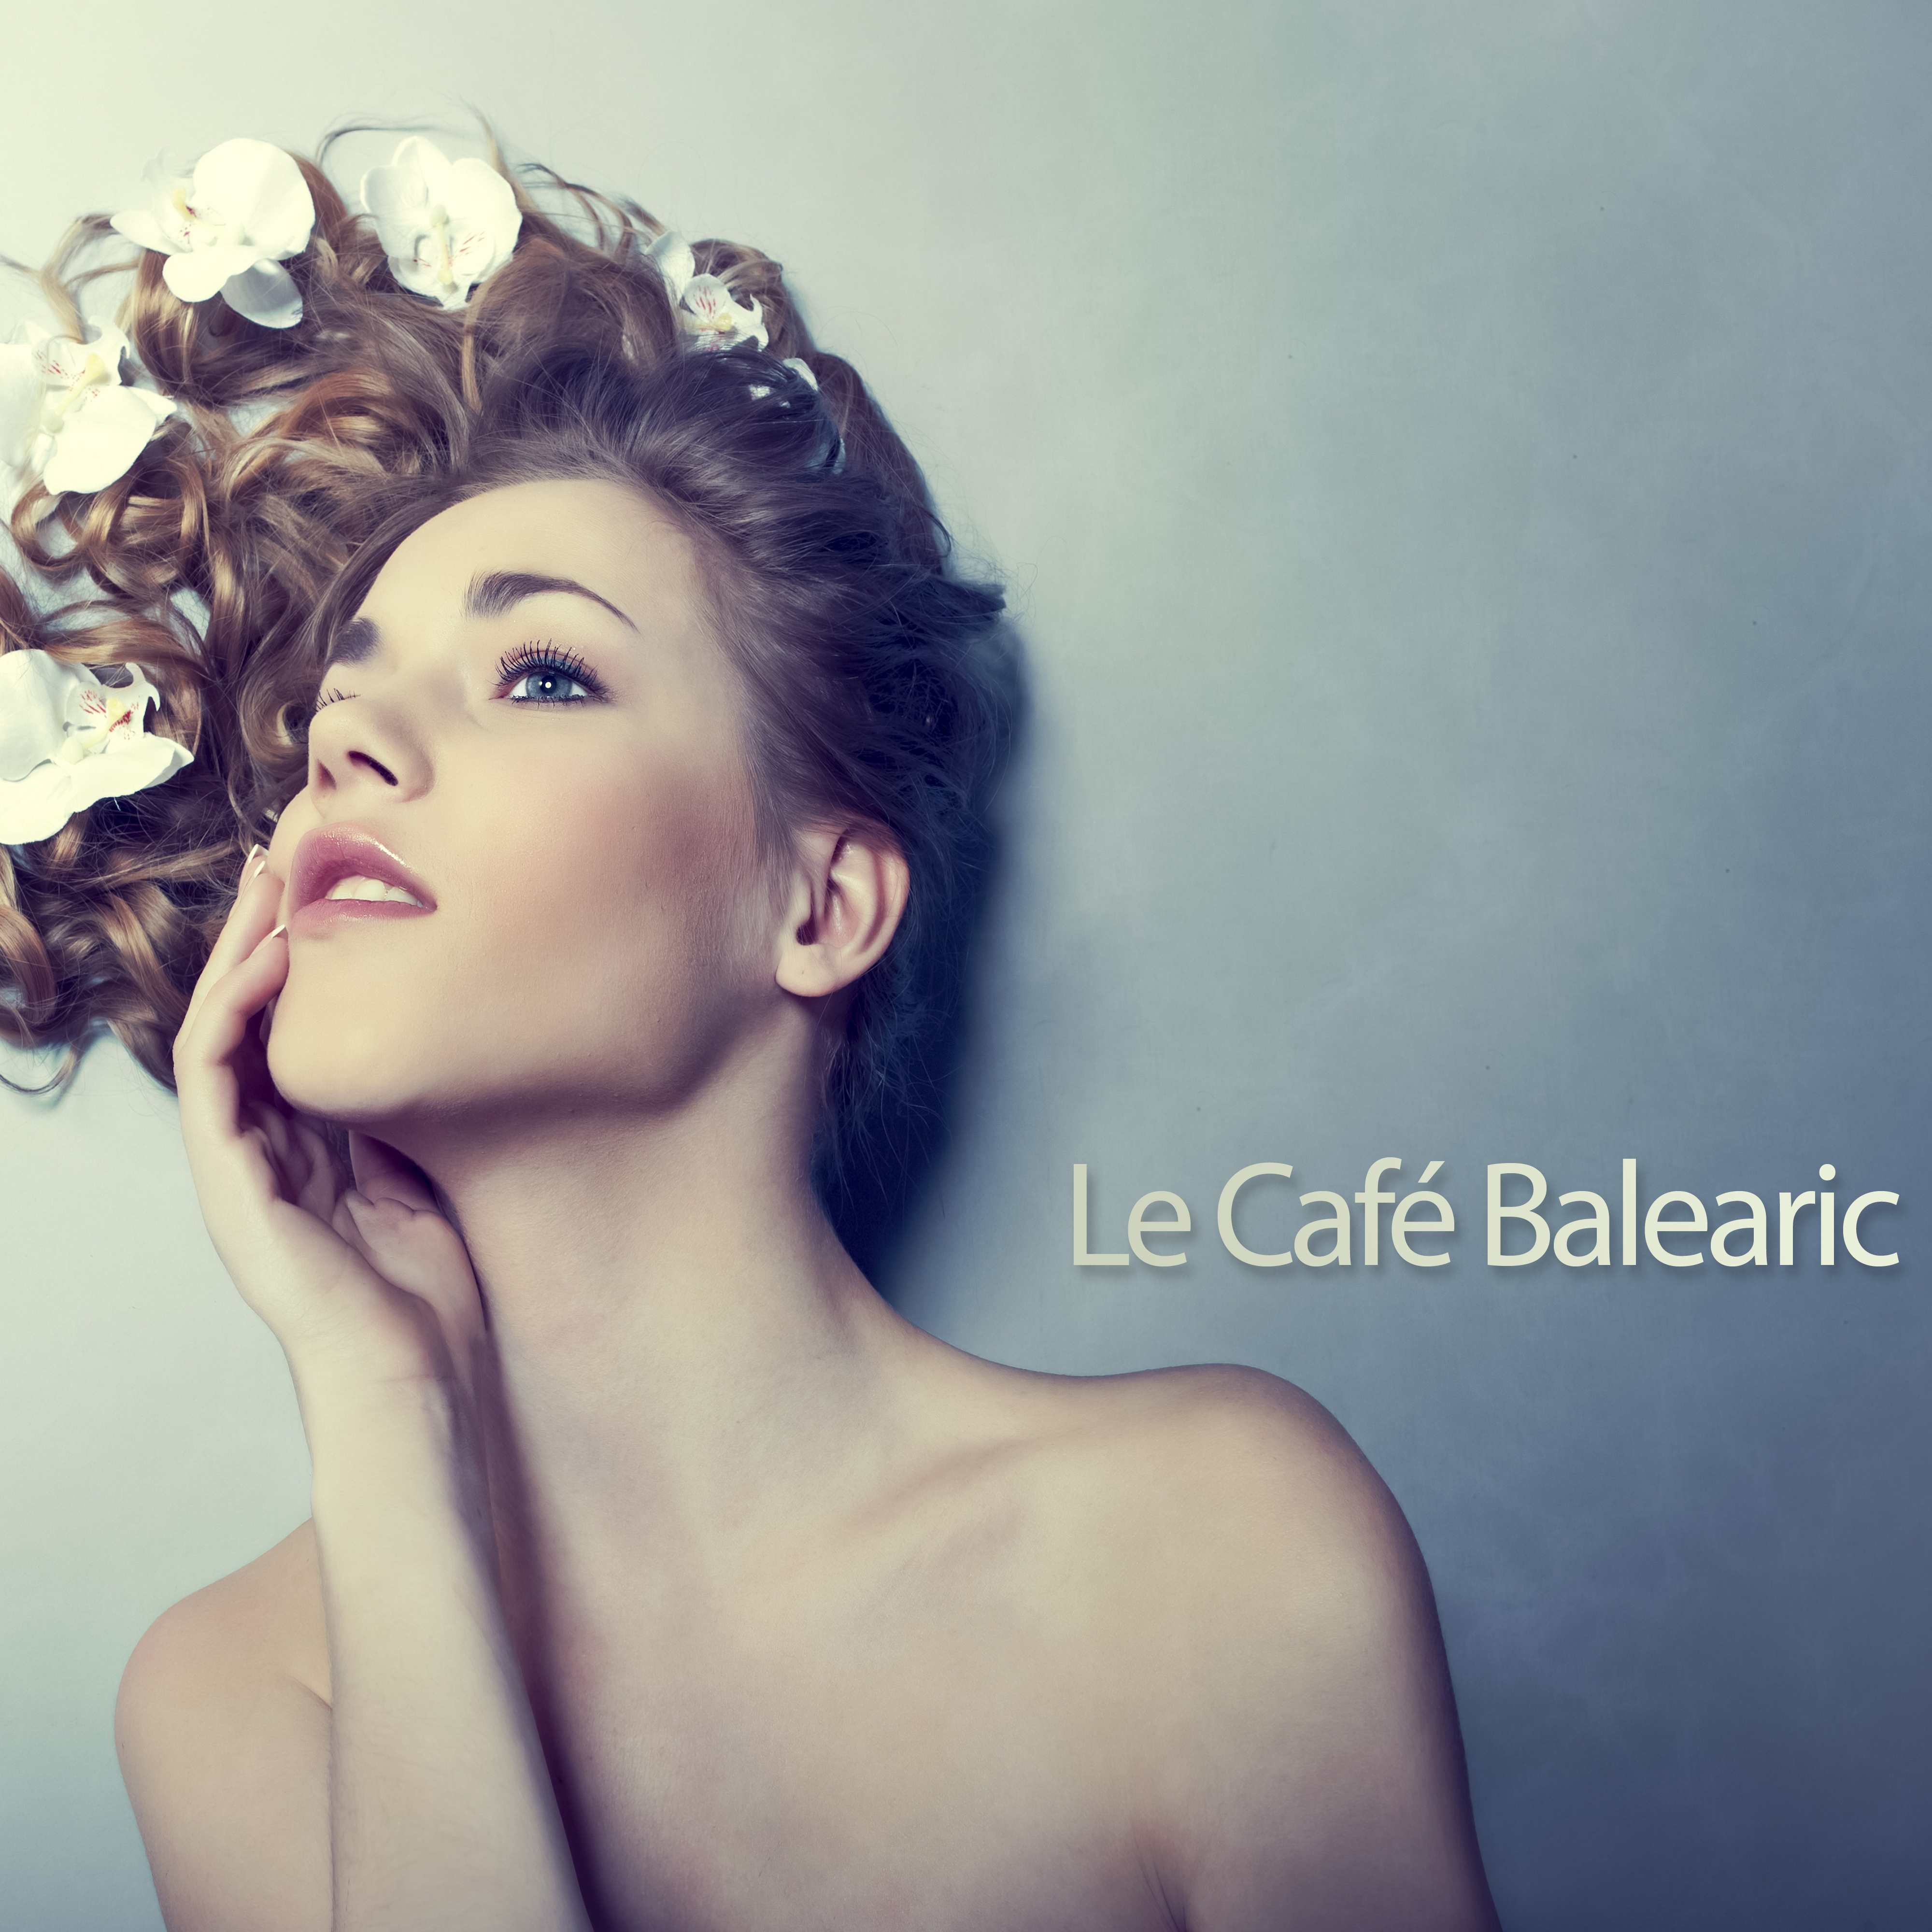 Le Cafe Balearic